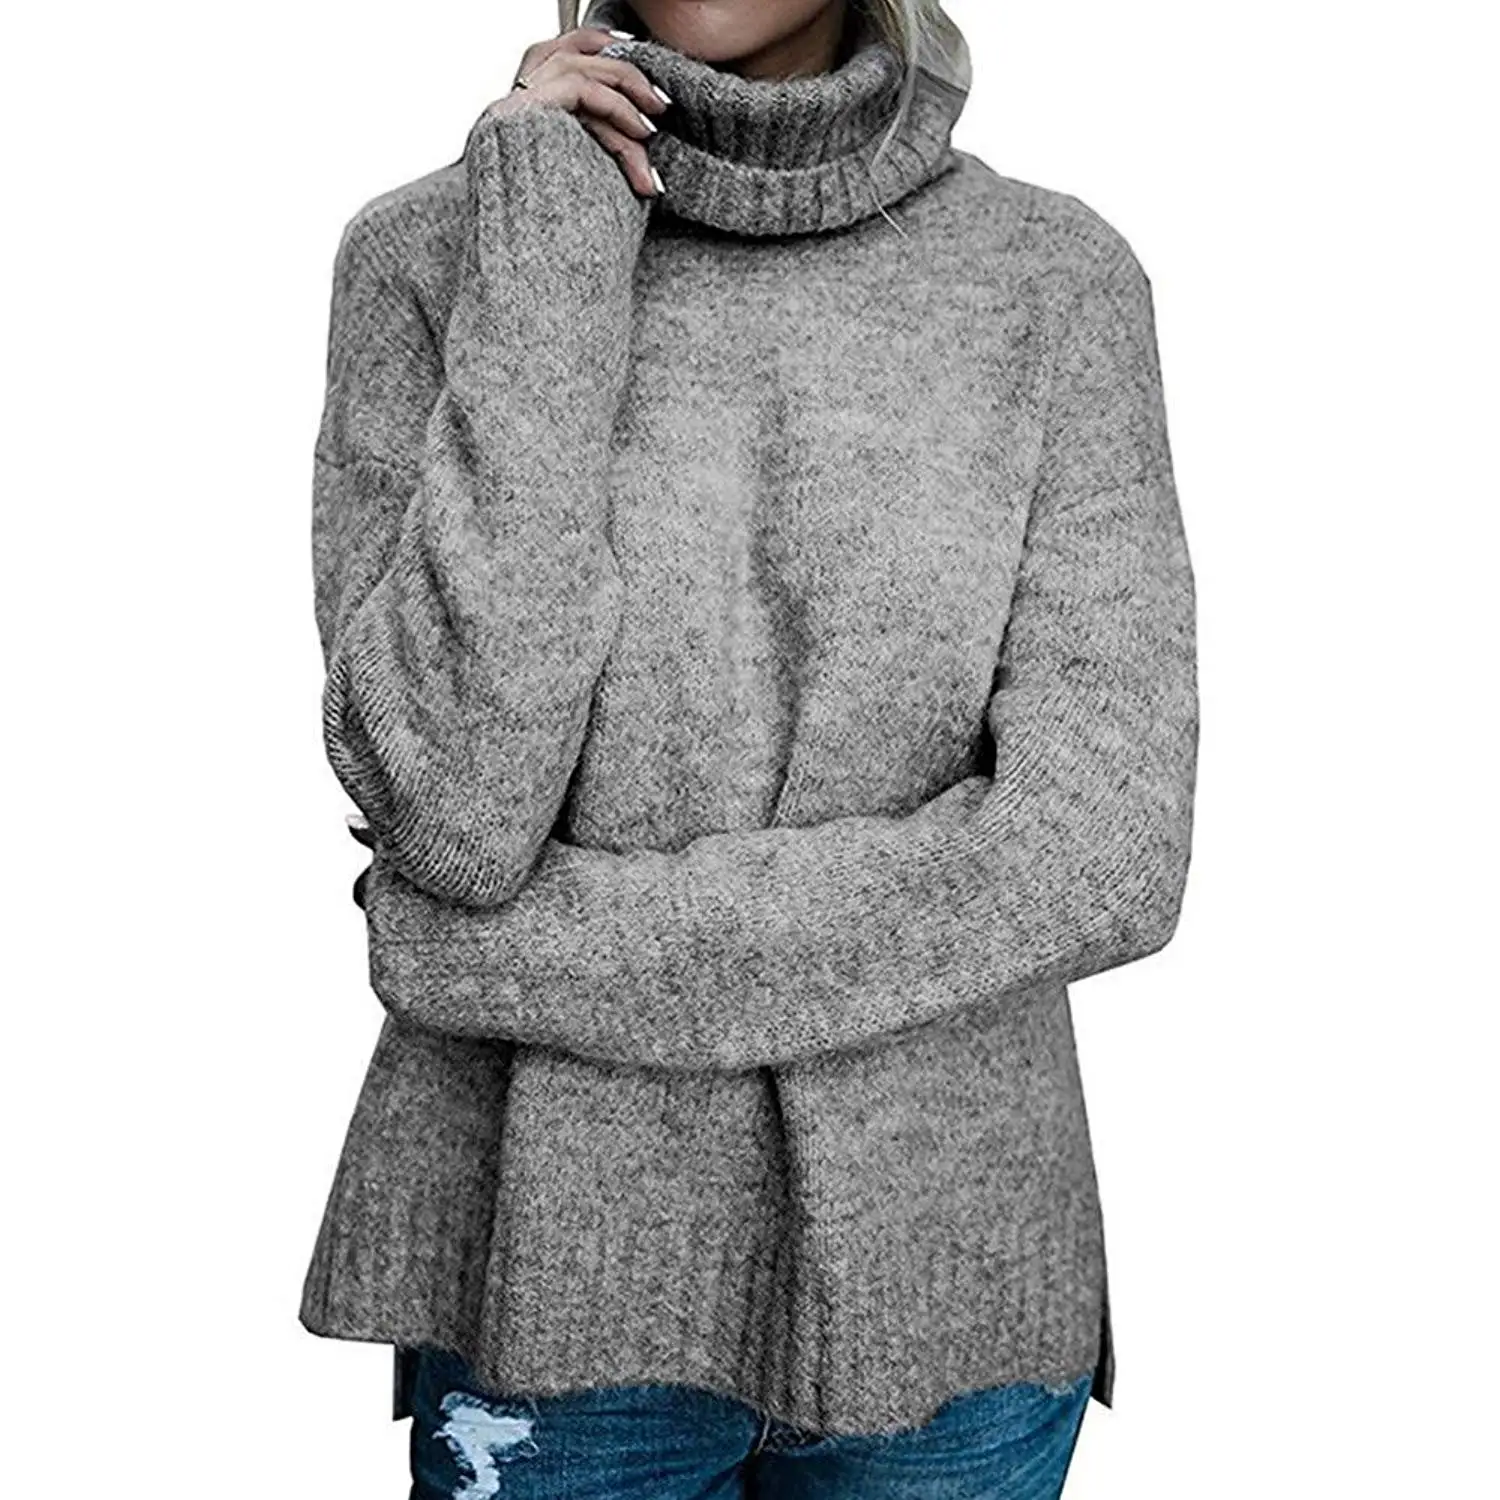 Buy Gyoume Winter Sweaters,Women Turtleneck Sweater Coats Knitting ...